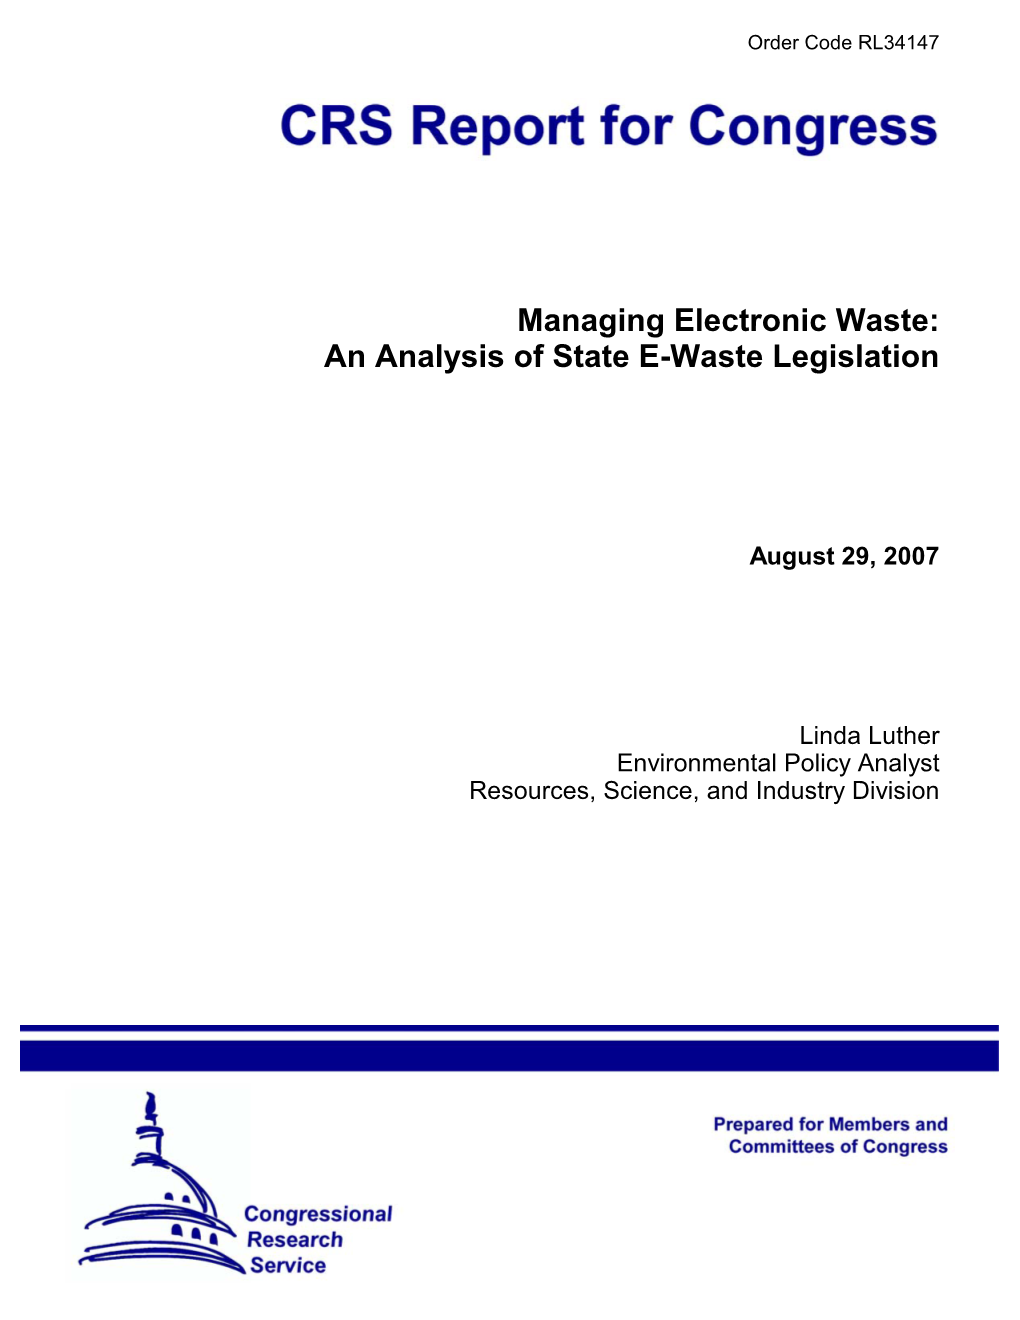 An Analysis of State E-Waste Legislation